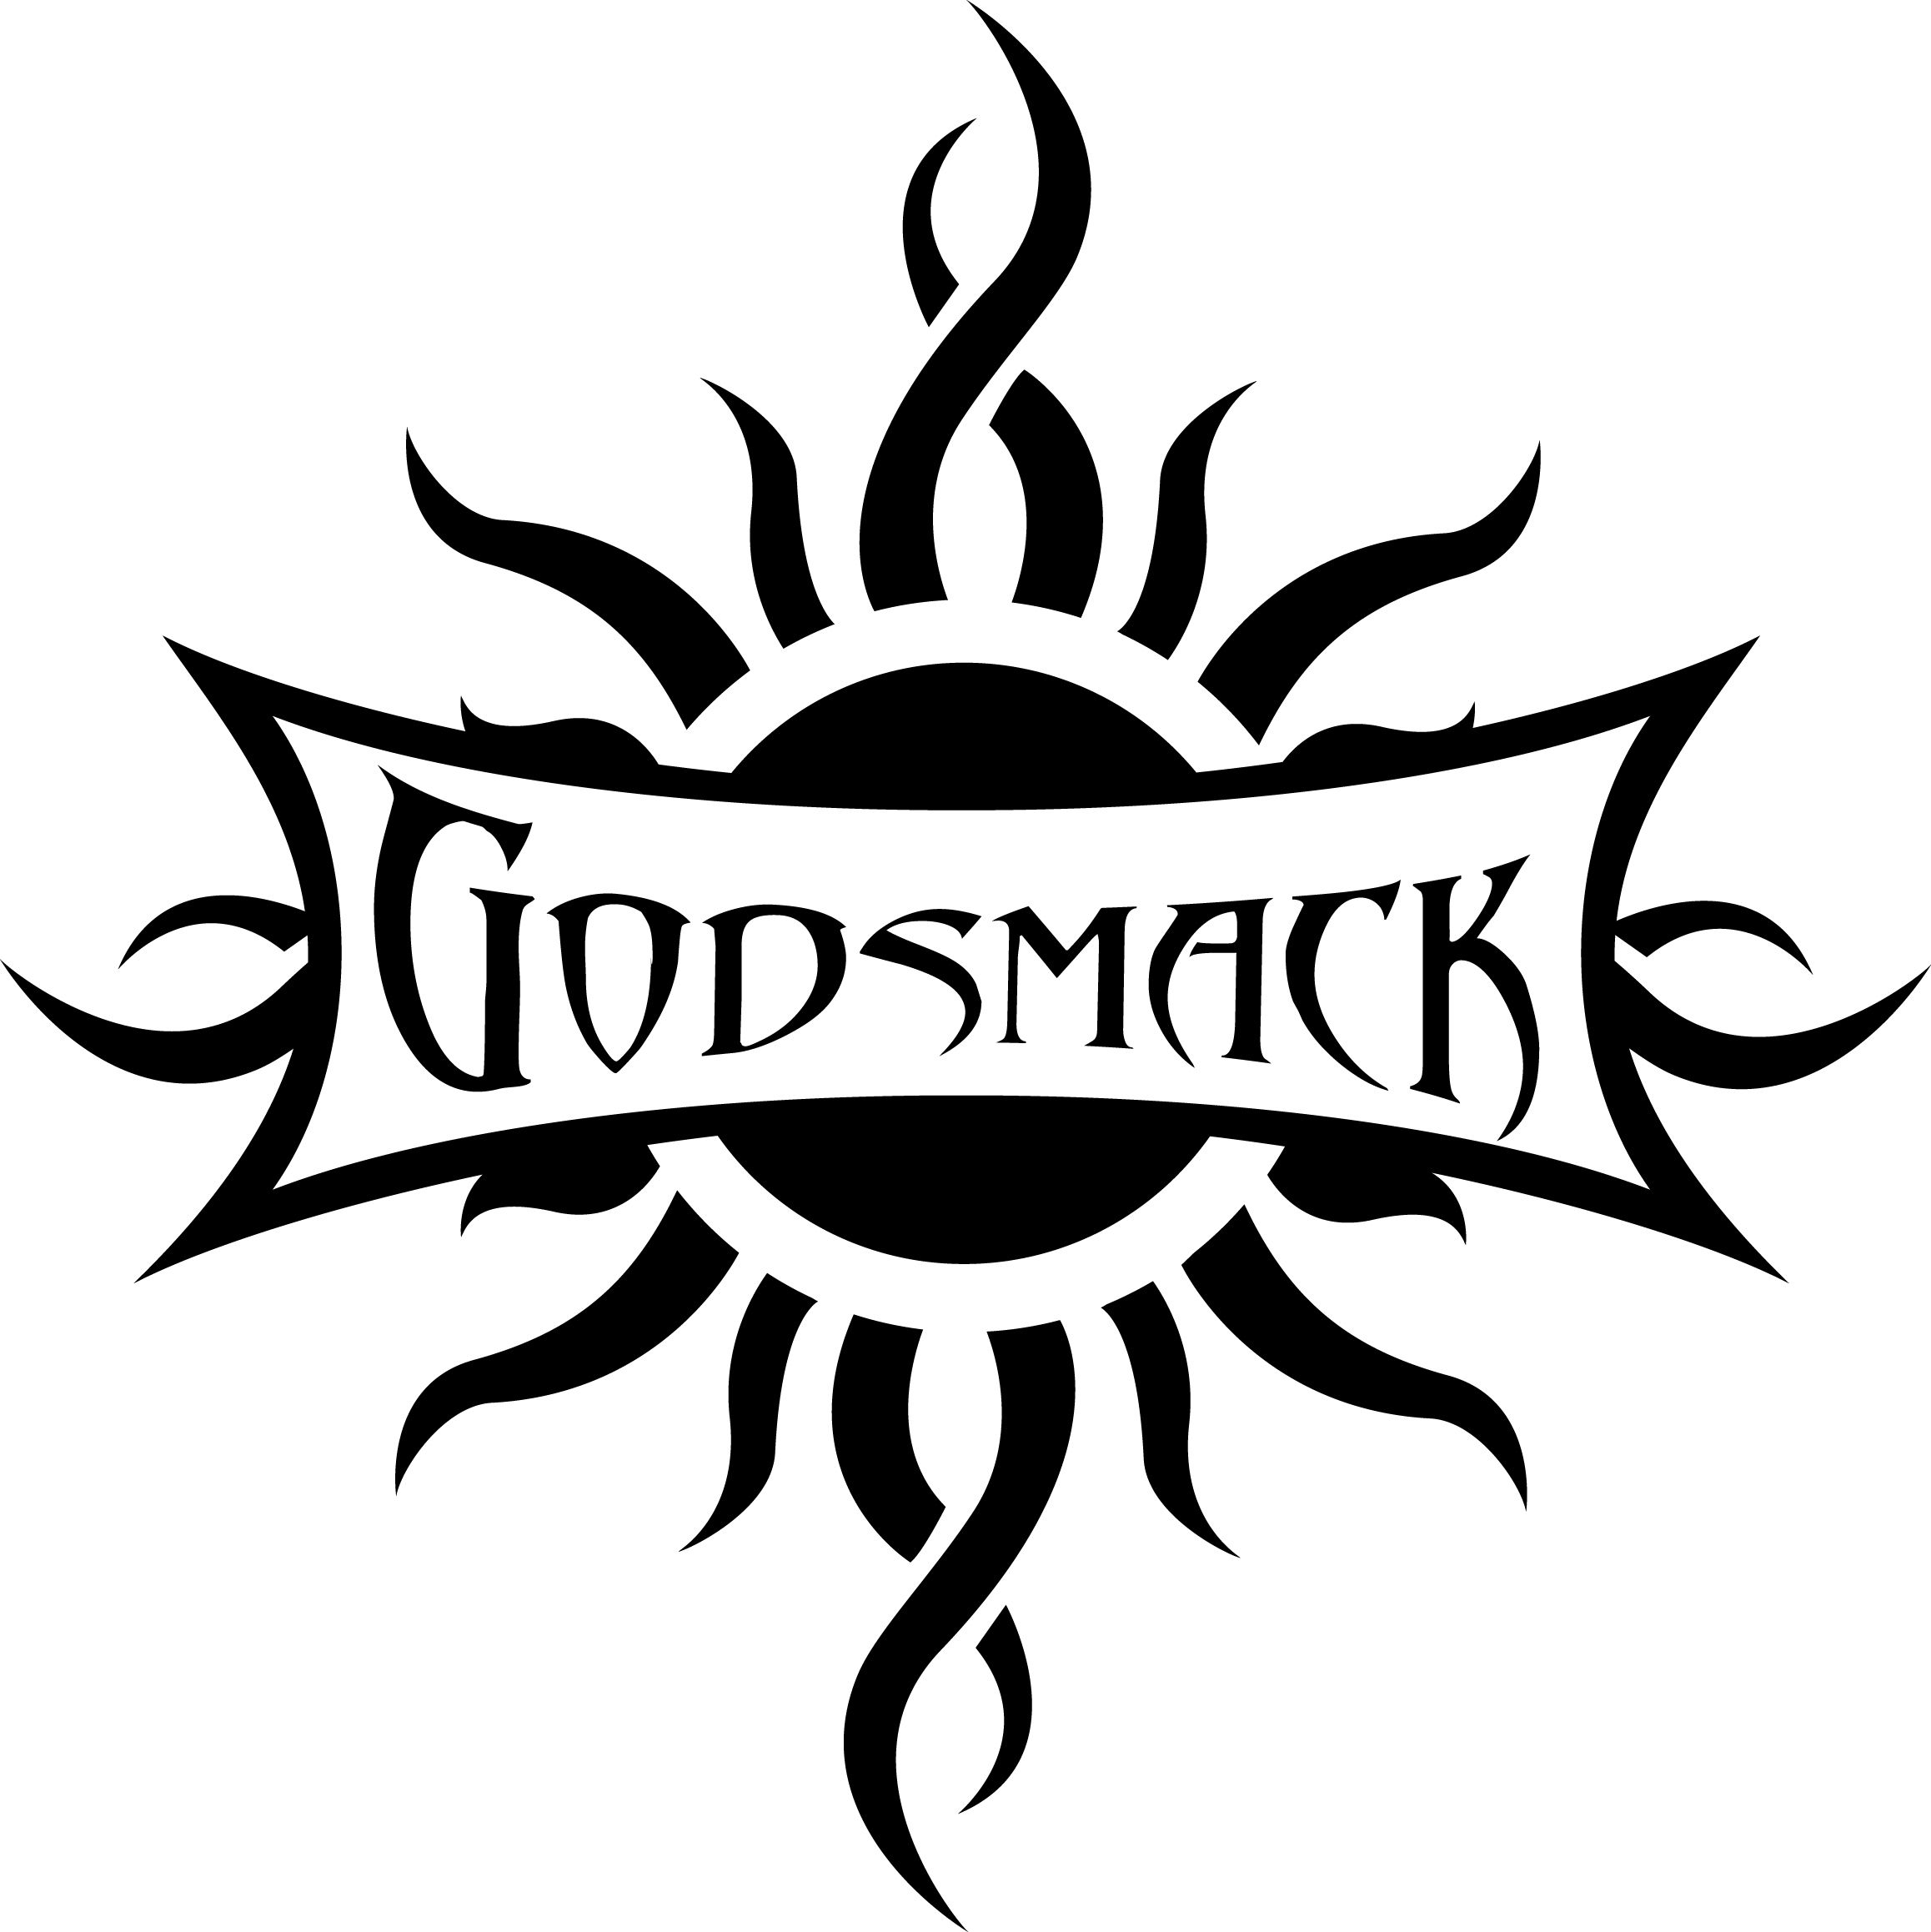 Godsmack Wallpapers